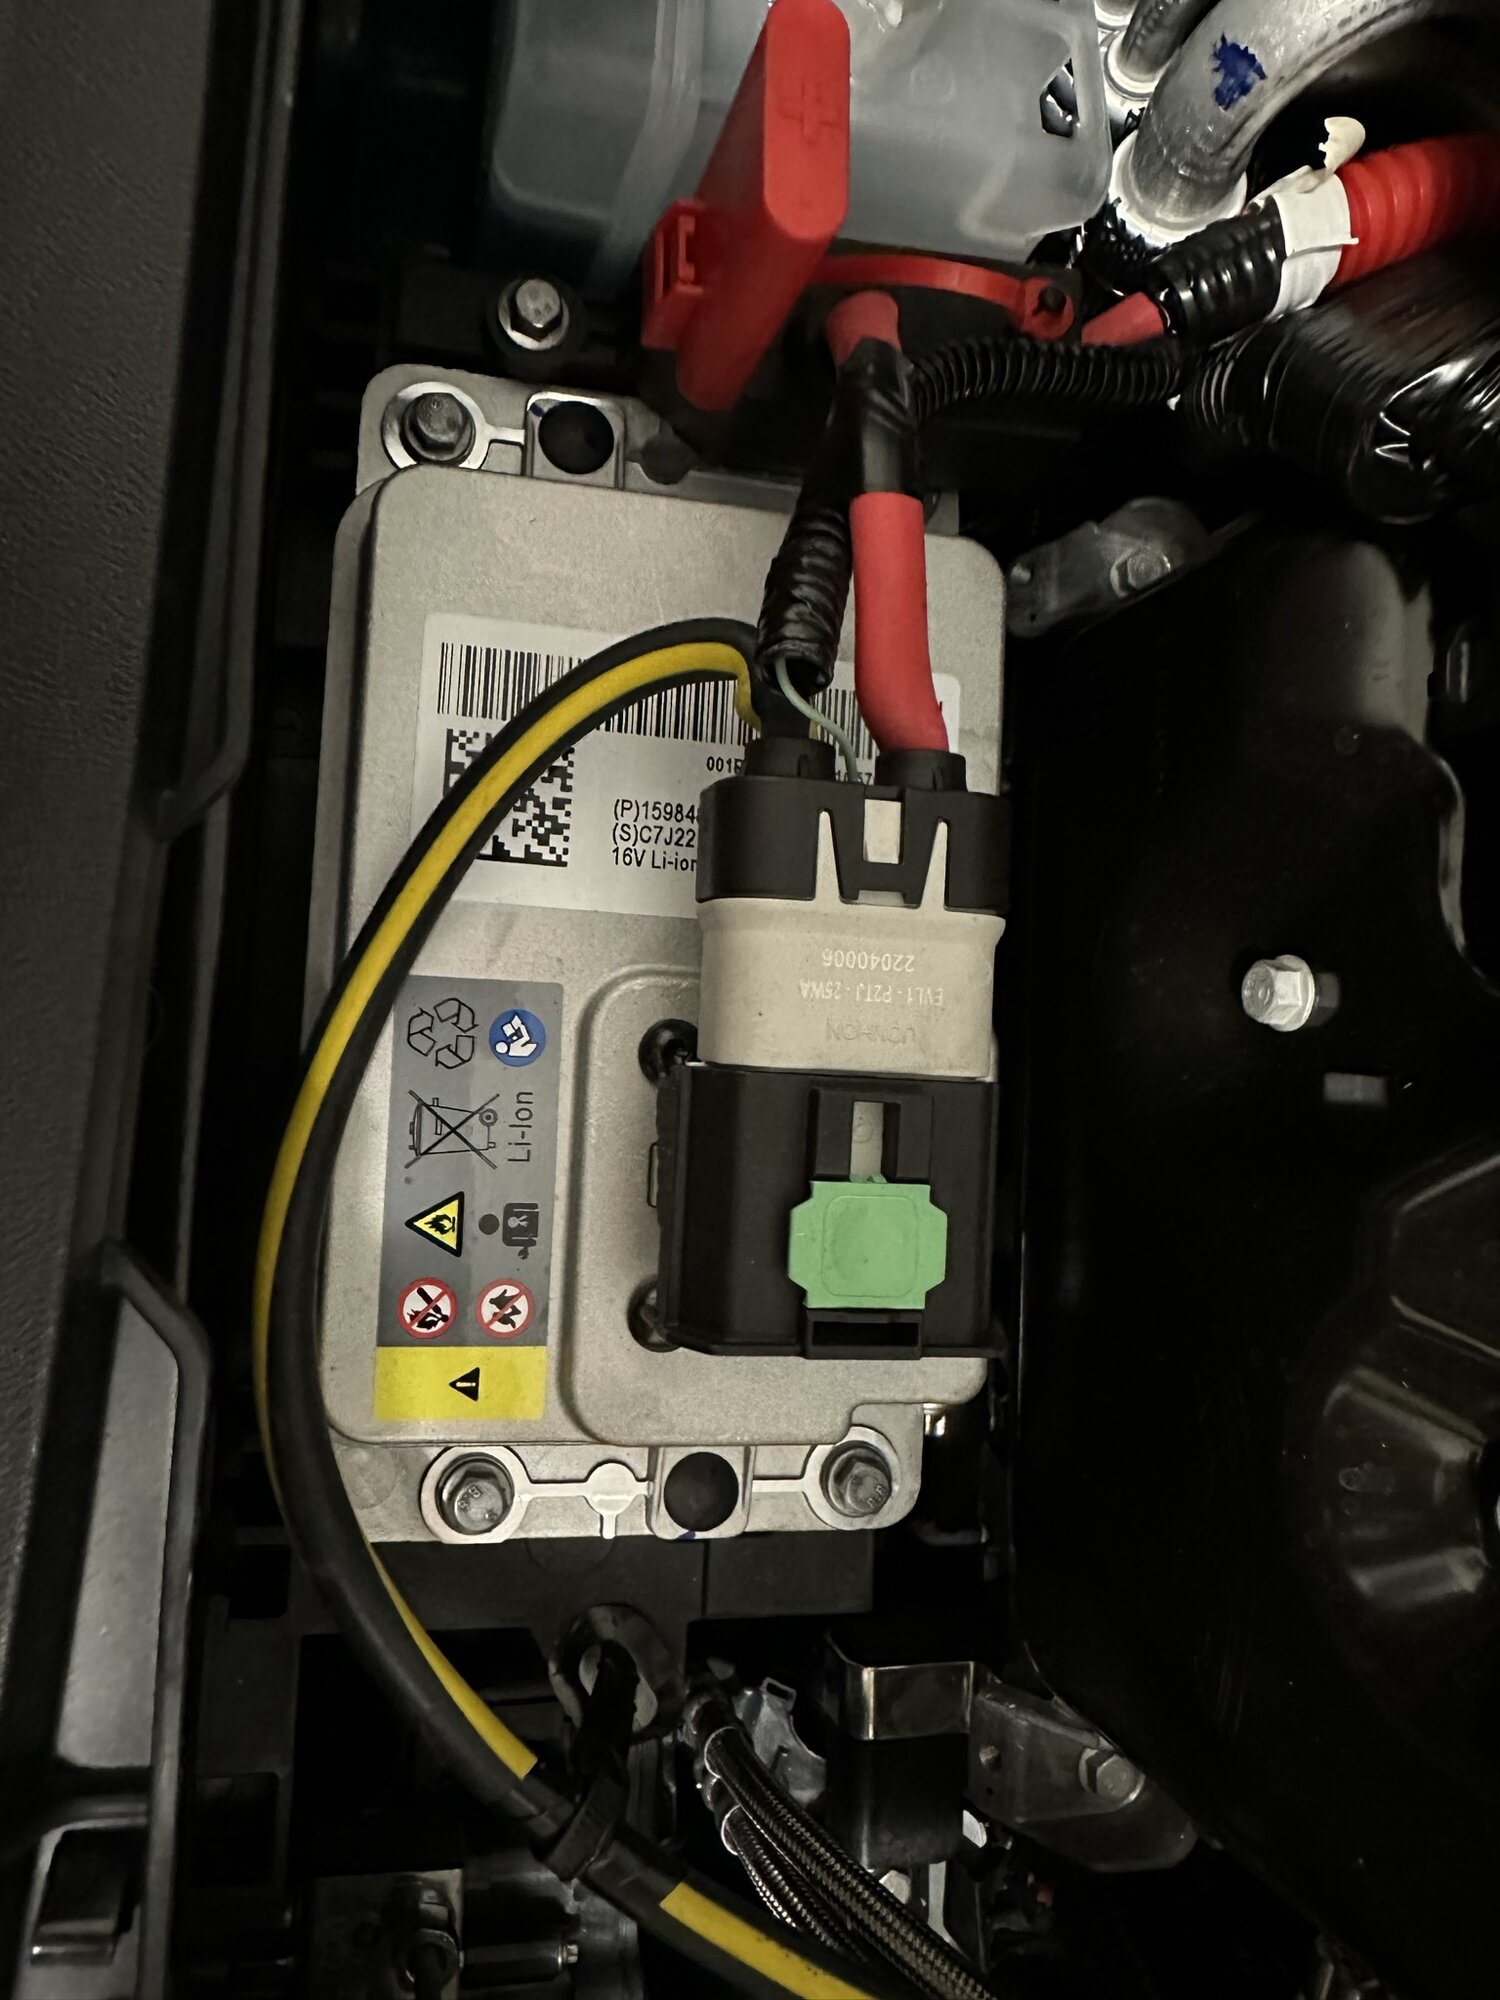 16V Lit-Ion Battery | Tesla Motors Club